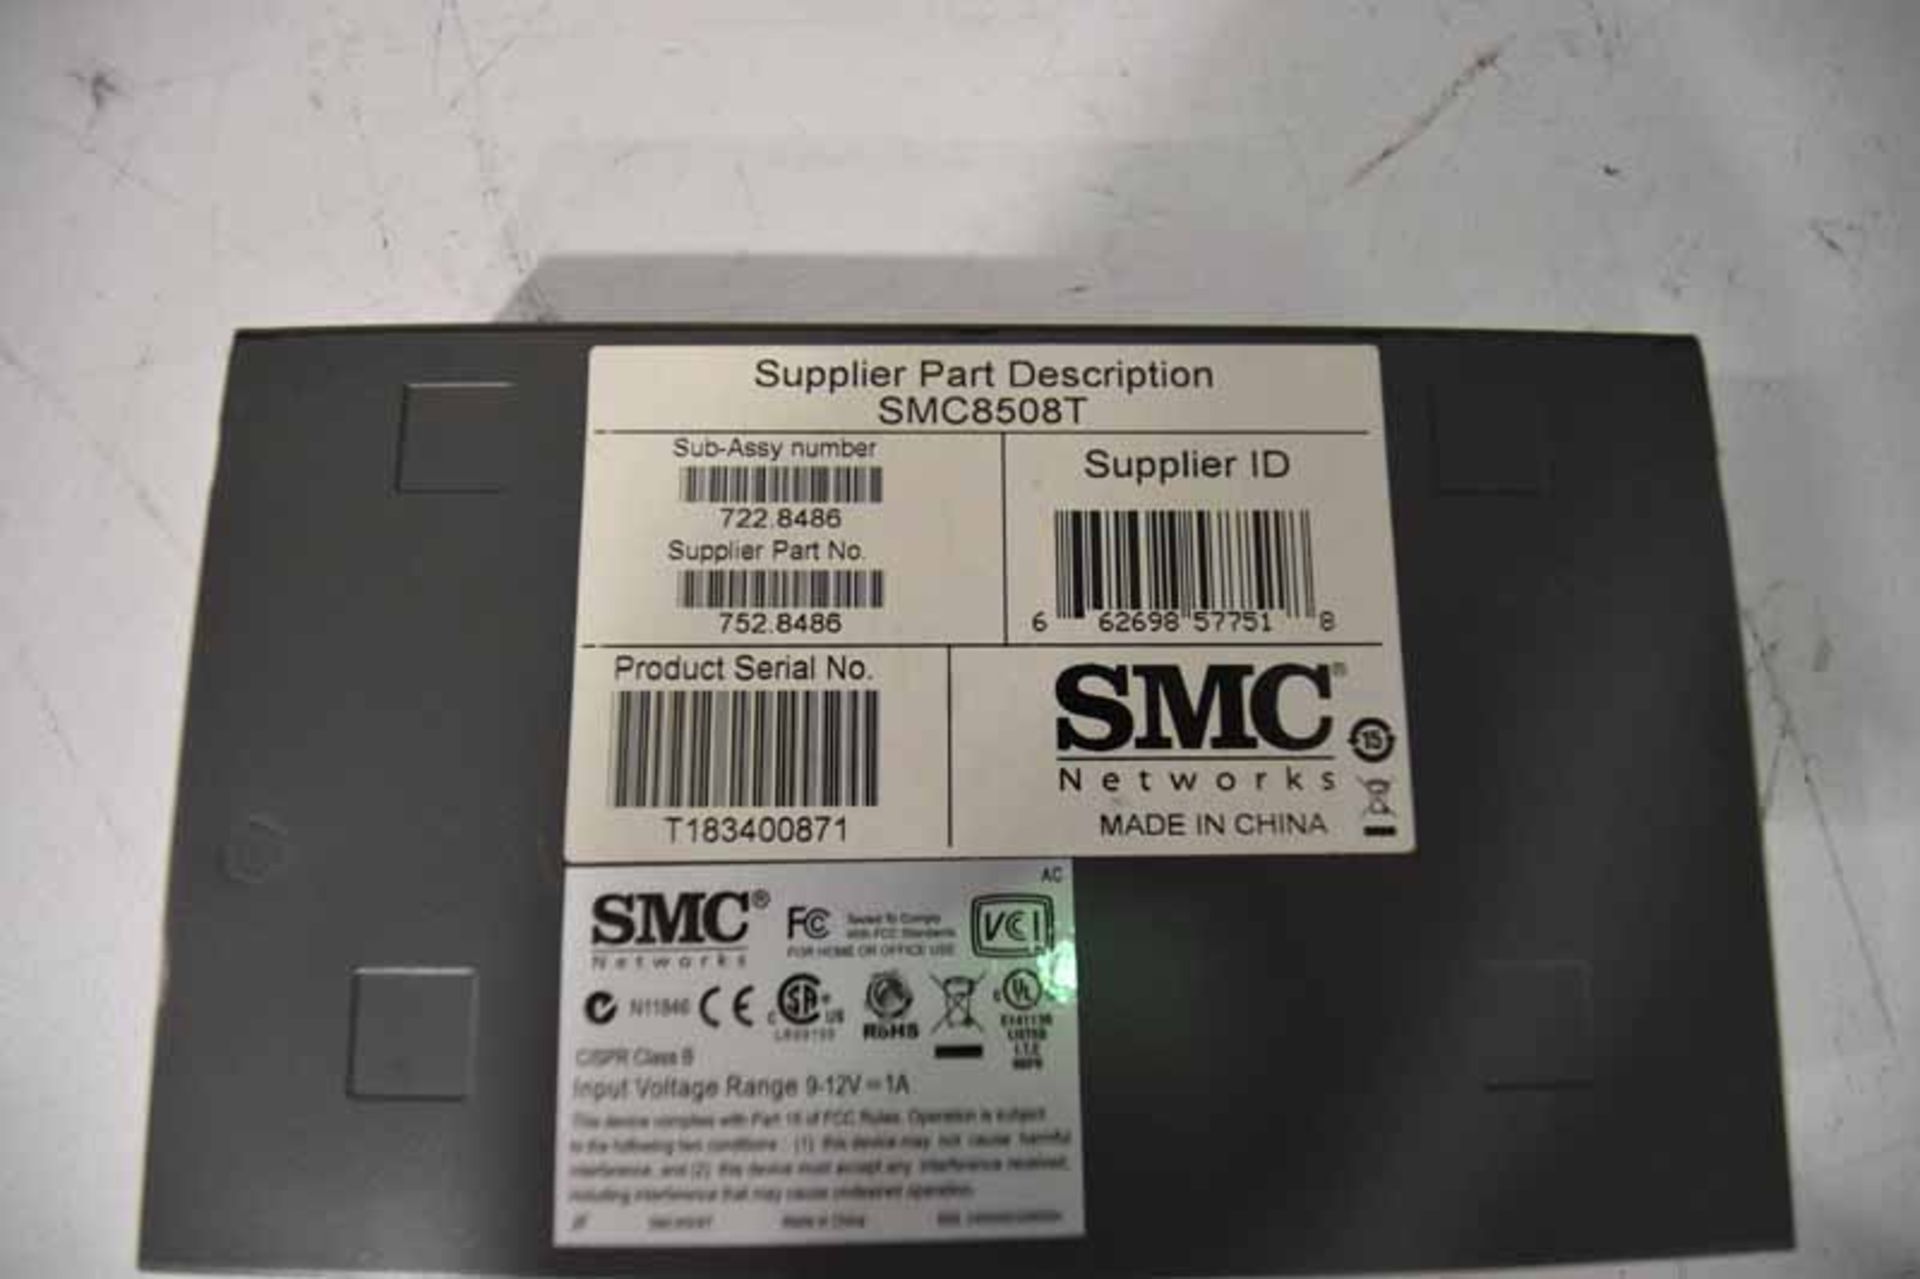 1 - SMC Networks EZ Switch 8-port Model SMC8508T - Image 2 of 2